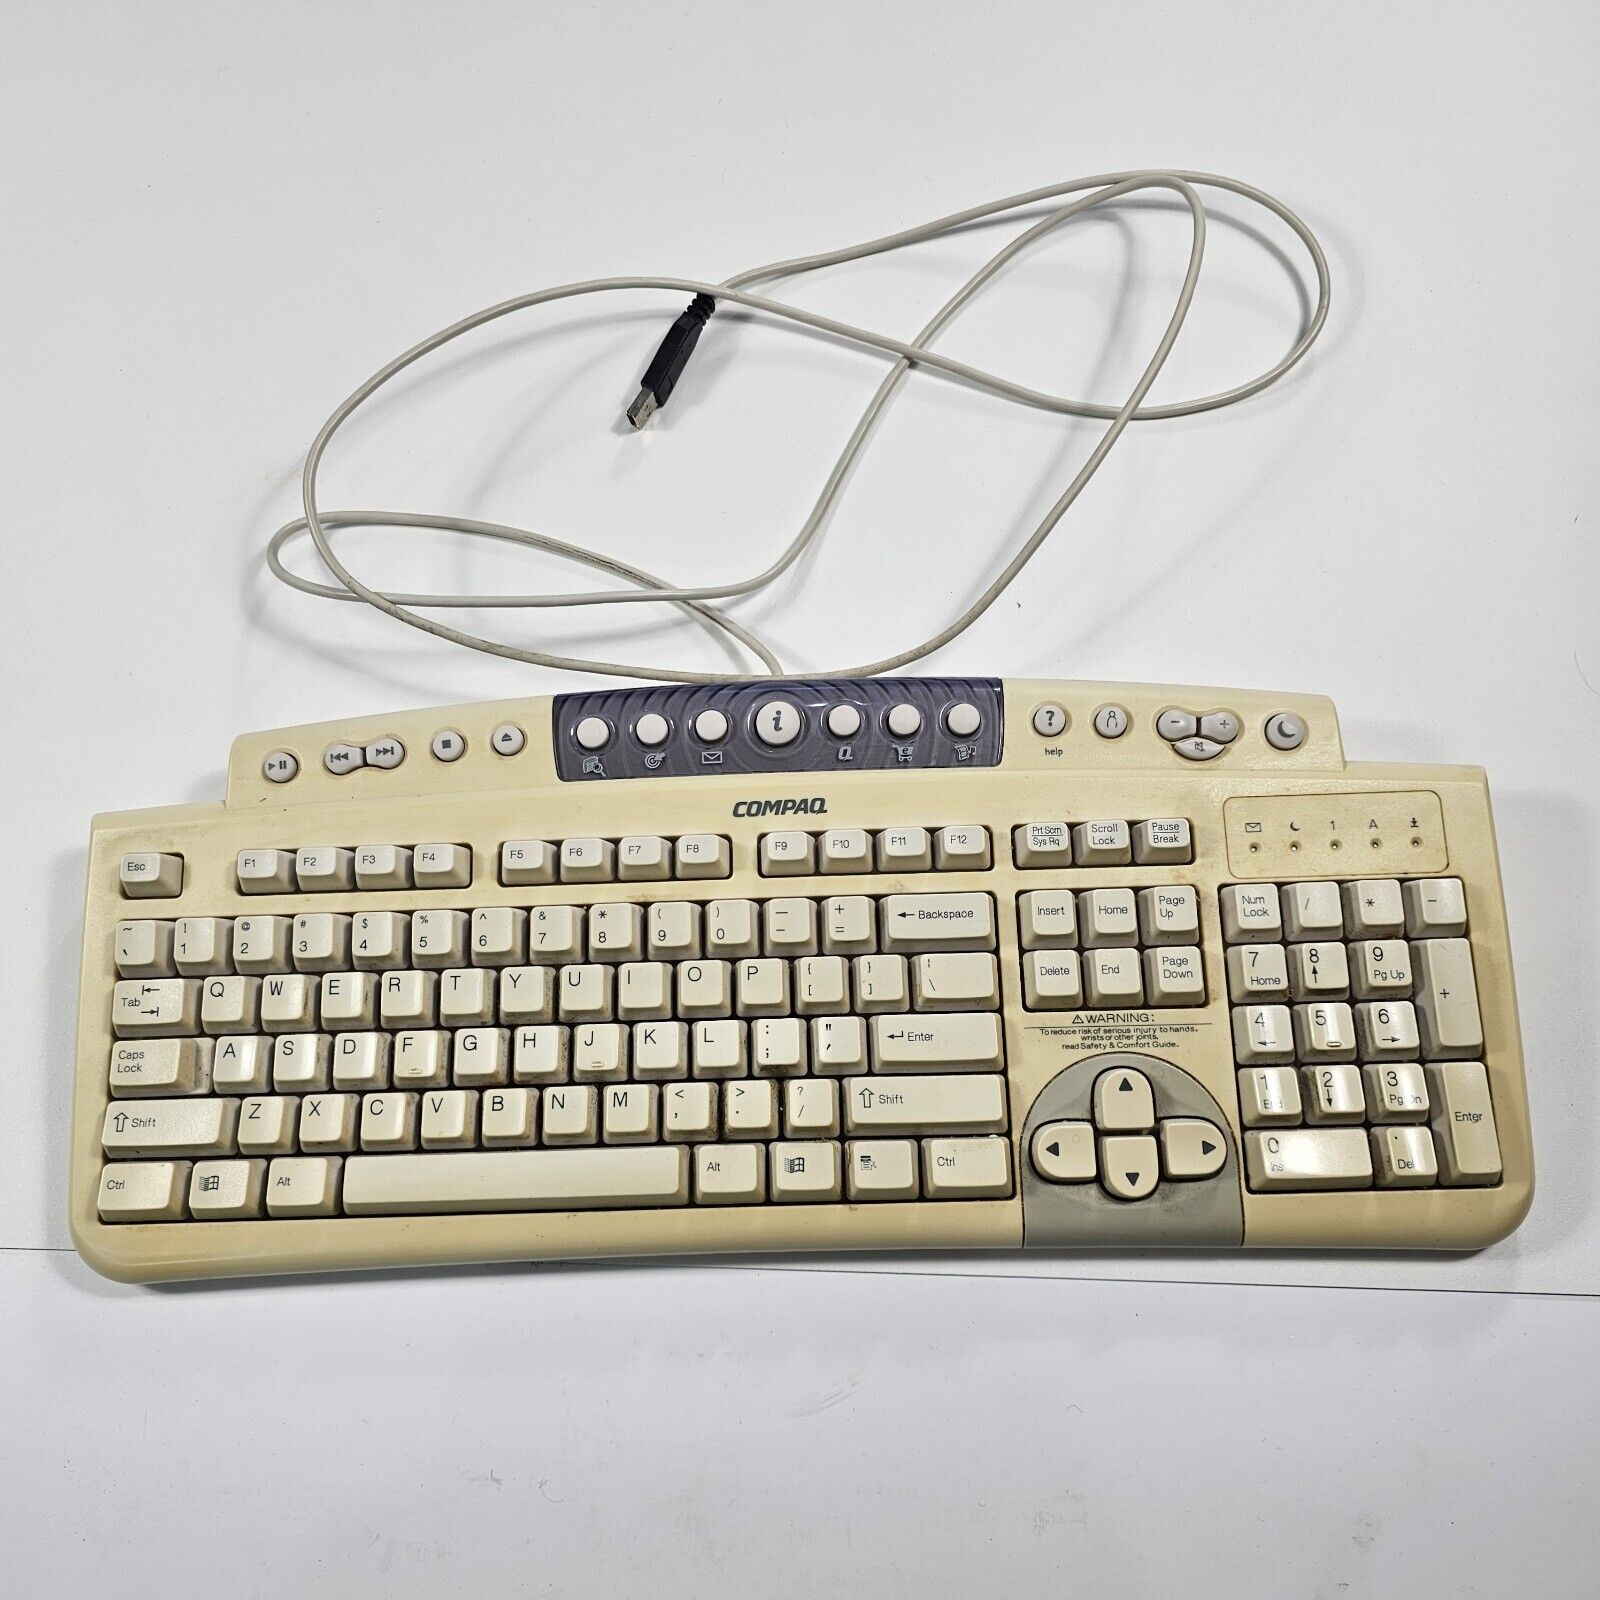 Vintage - Compaq Genuine Desktop USB USB Keyboard - Model KU-9978